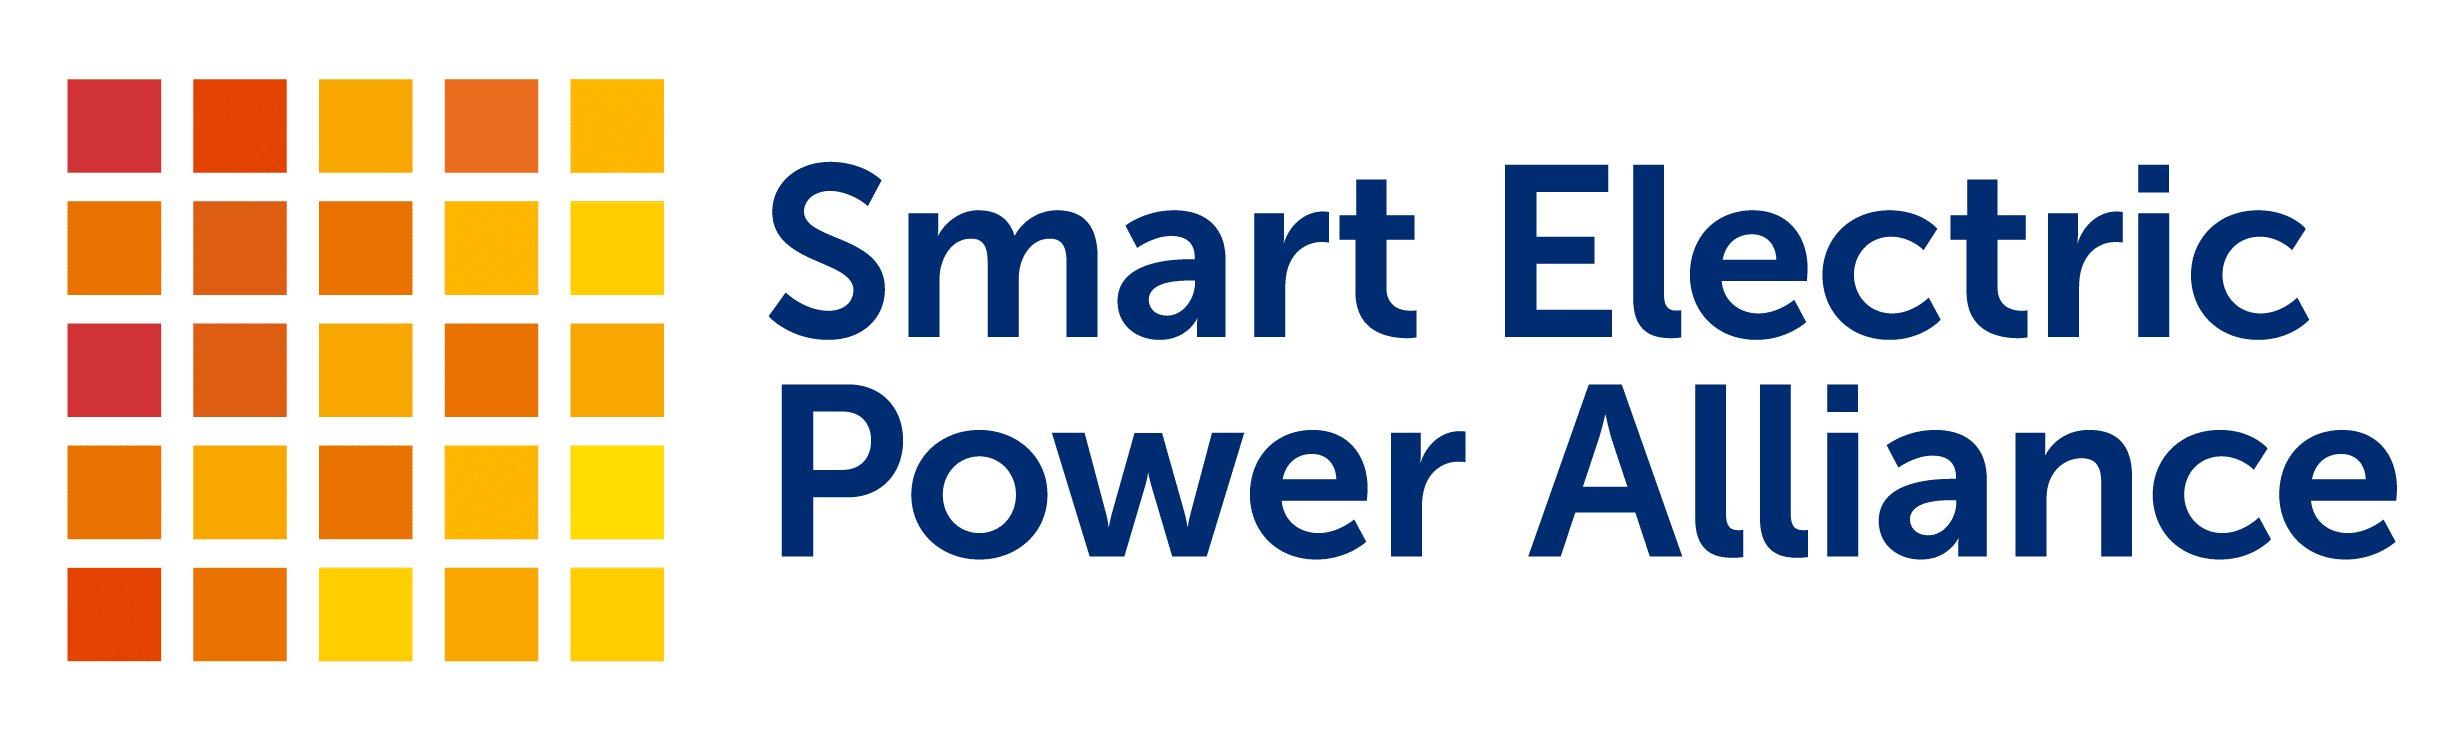 Smart_Electric_Power_Alliance_logo_2016